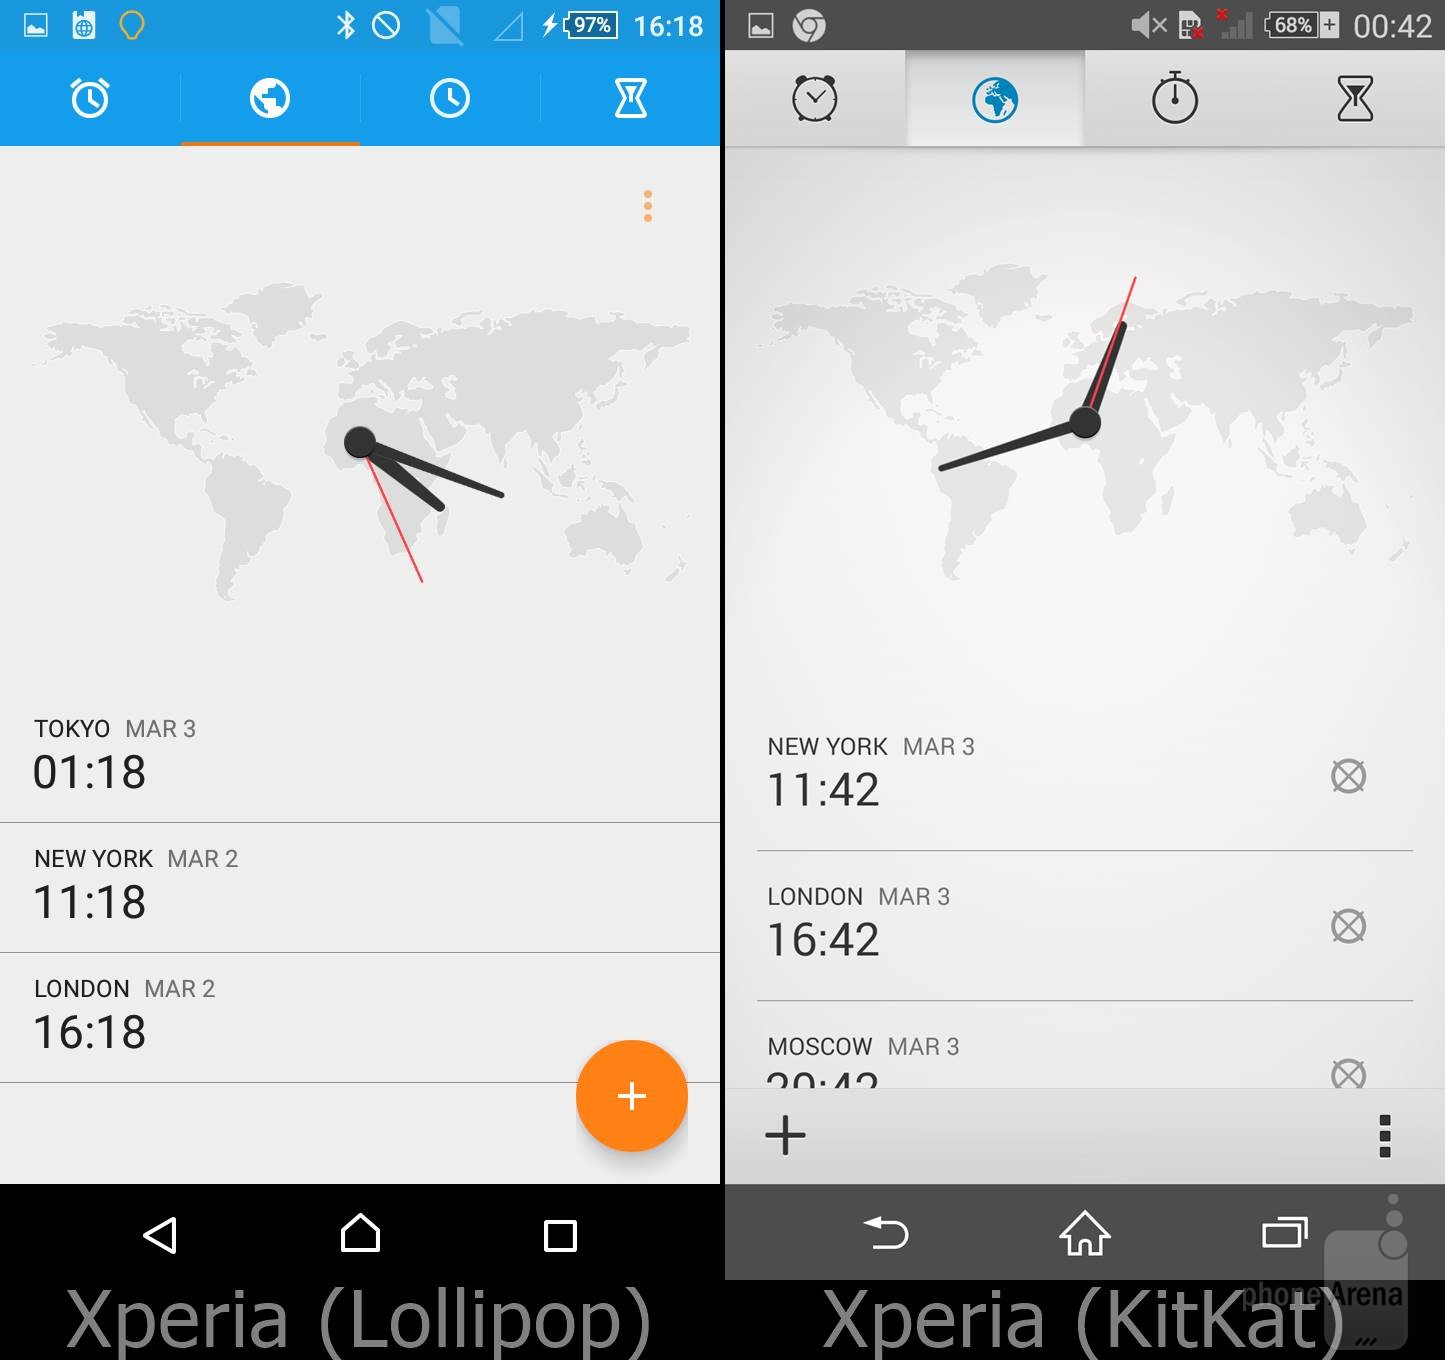 Xperia Lollipop vs Xperia KitKat UI Comparison 19